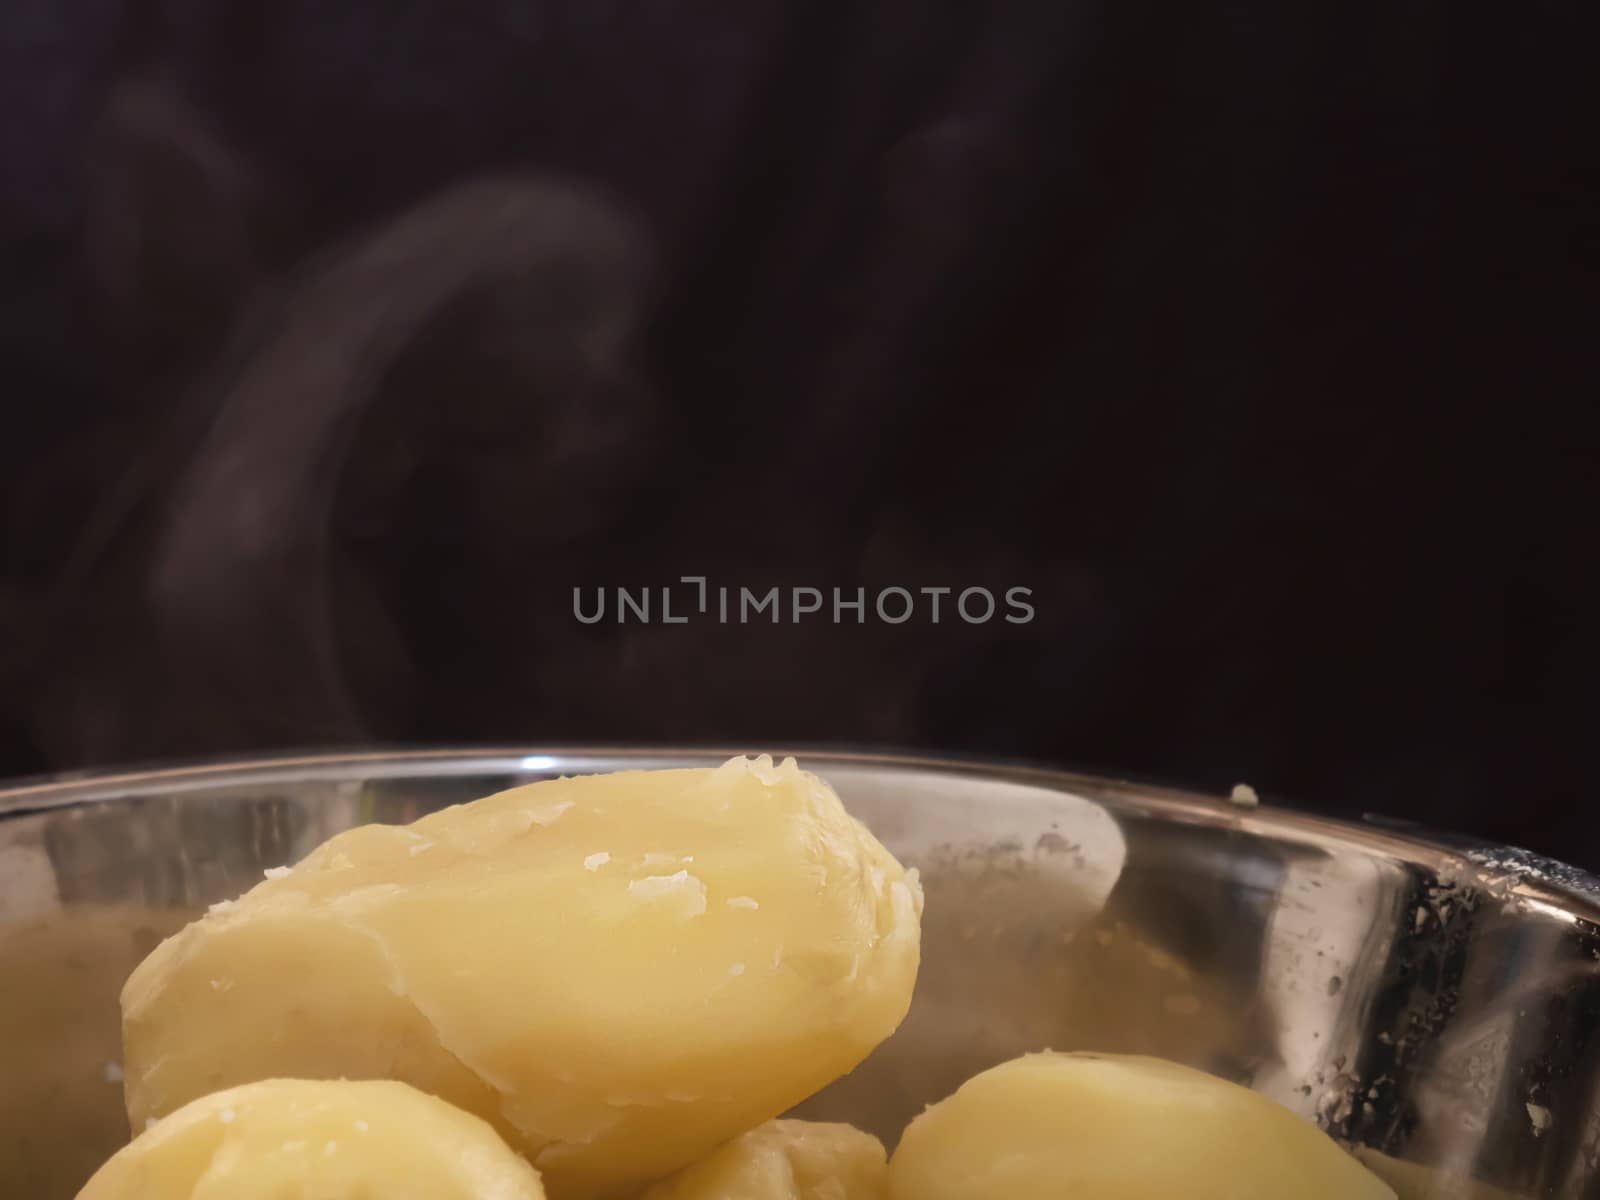 Boiled potato prepare to making food - potato cooking background concept